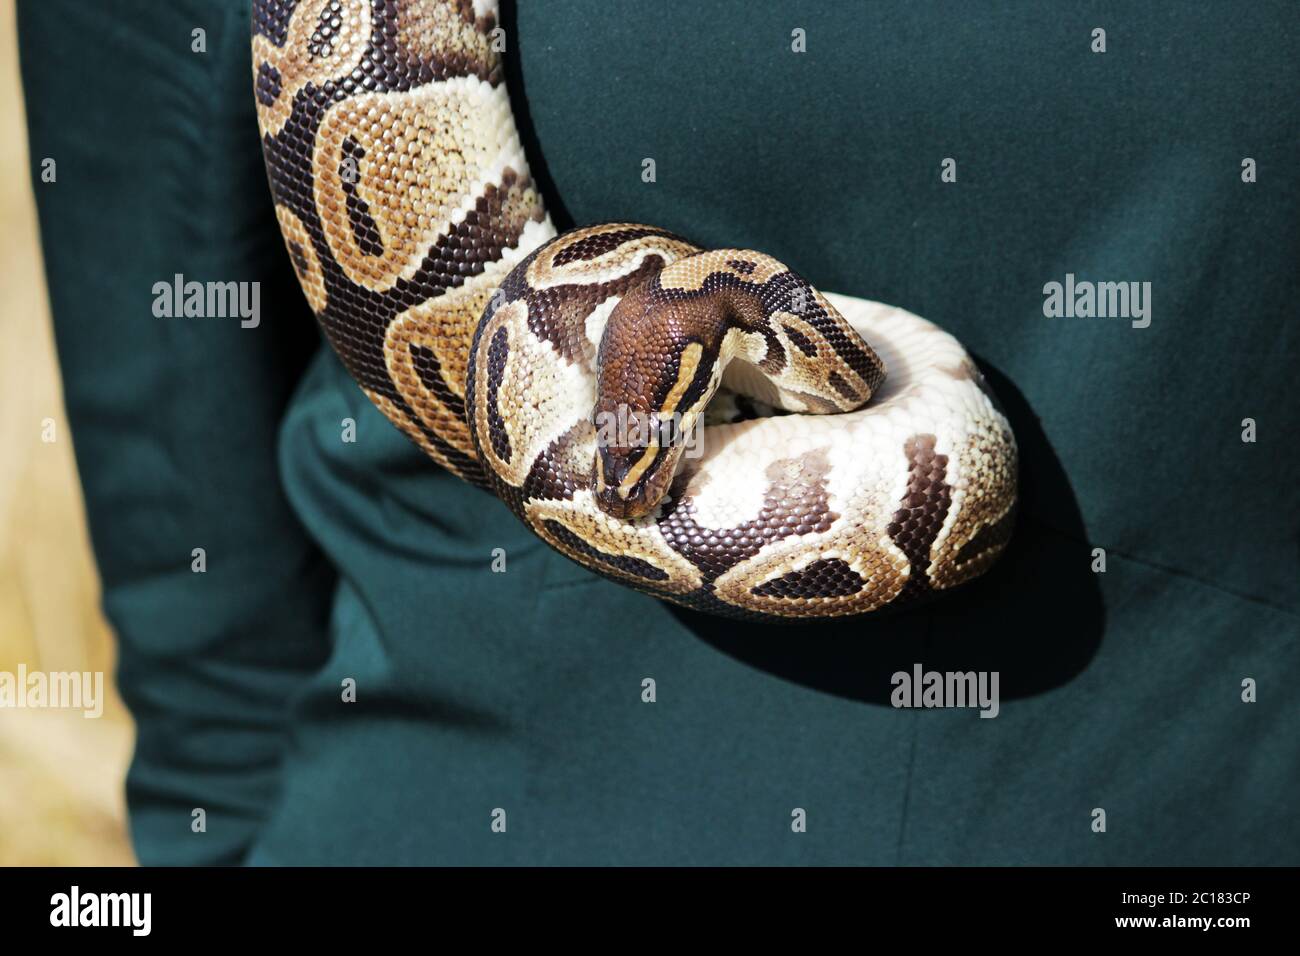 snake Royal Python, or Ball Python Python regius hangs around the girl's neck in a green dress. Stock Photo